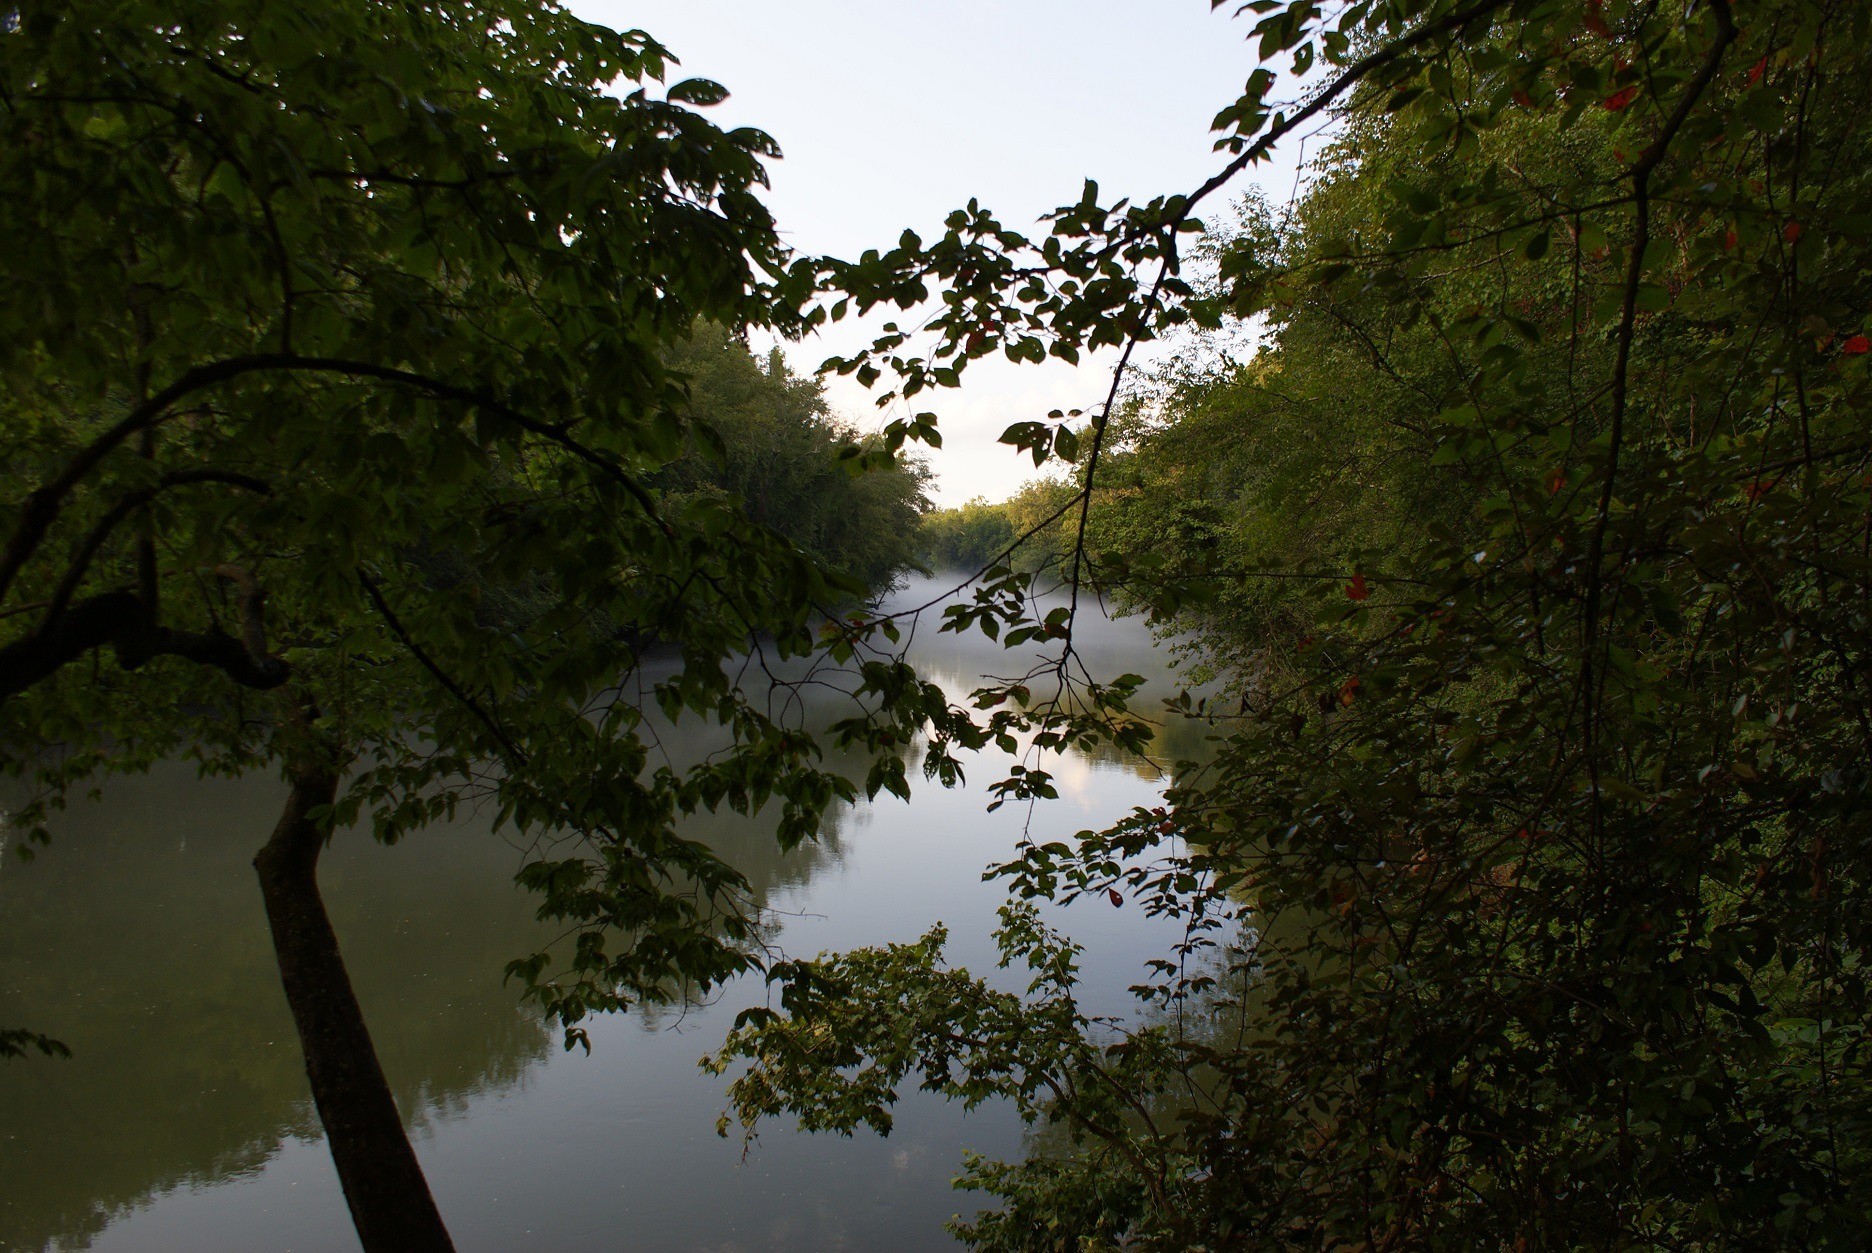 The Chattahoochee River in Georgia.